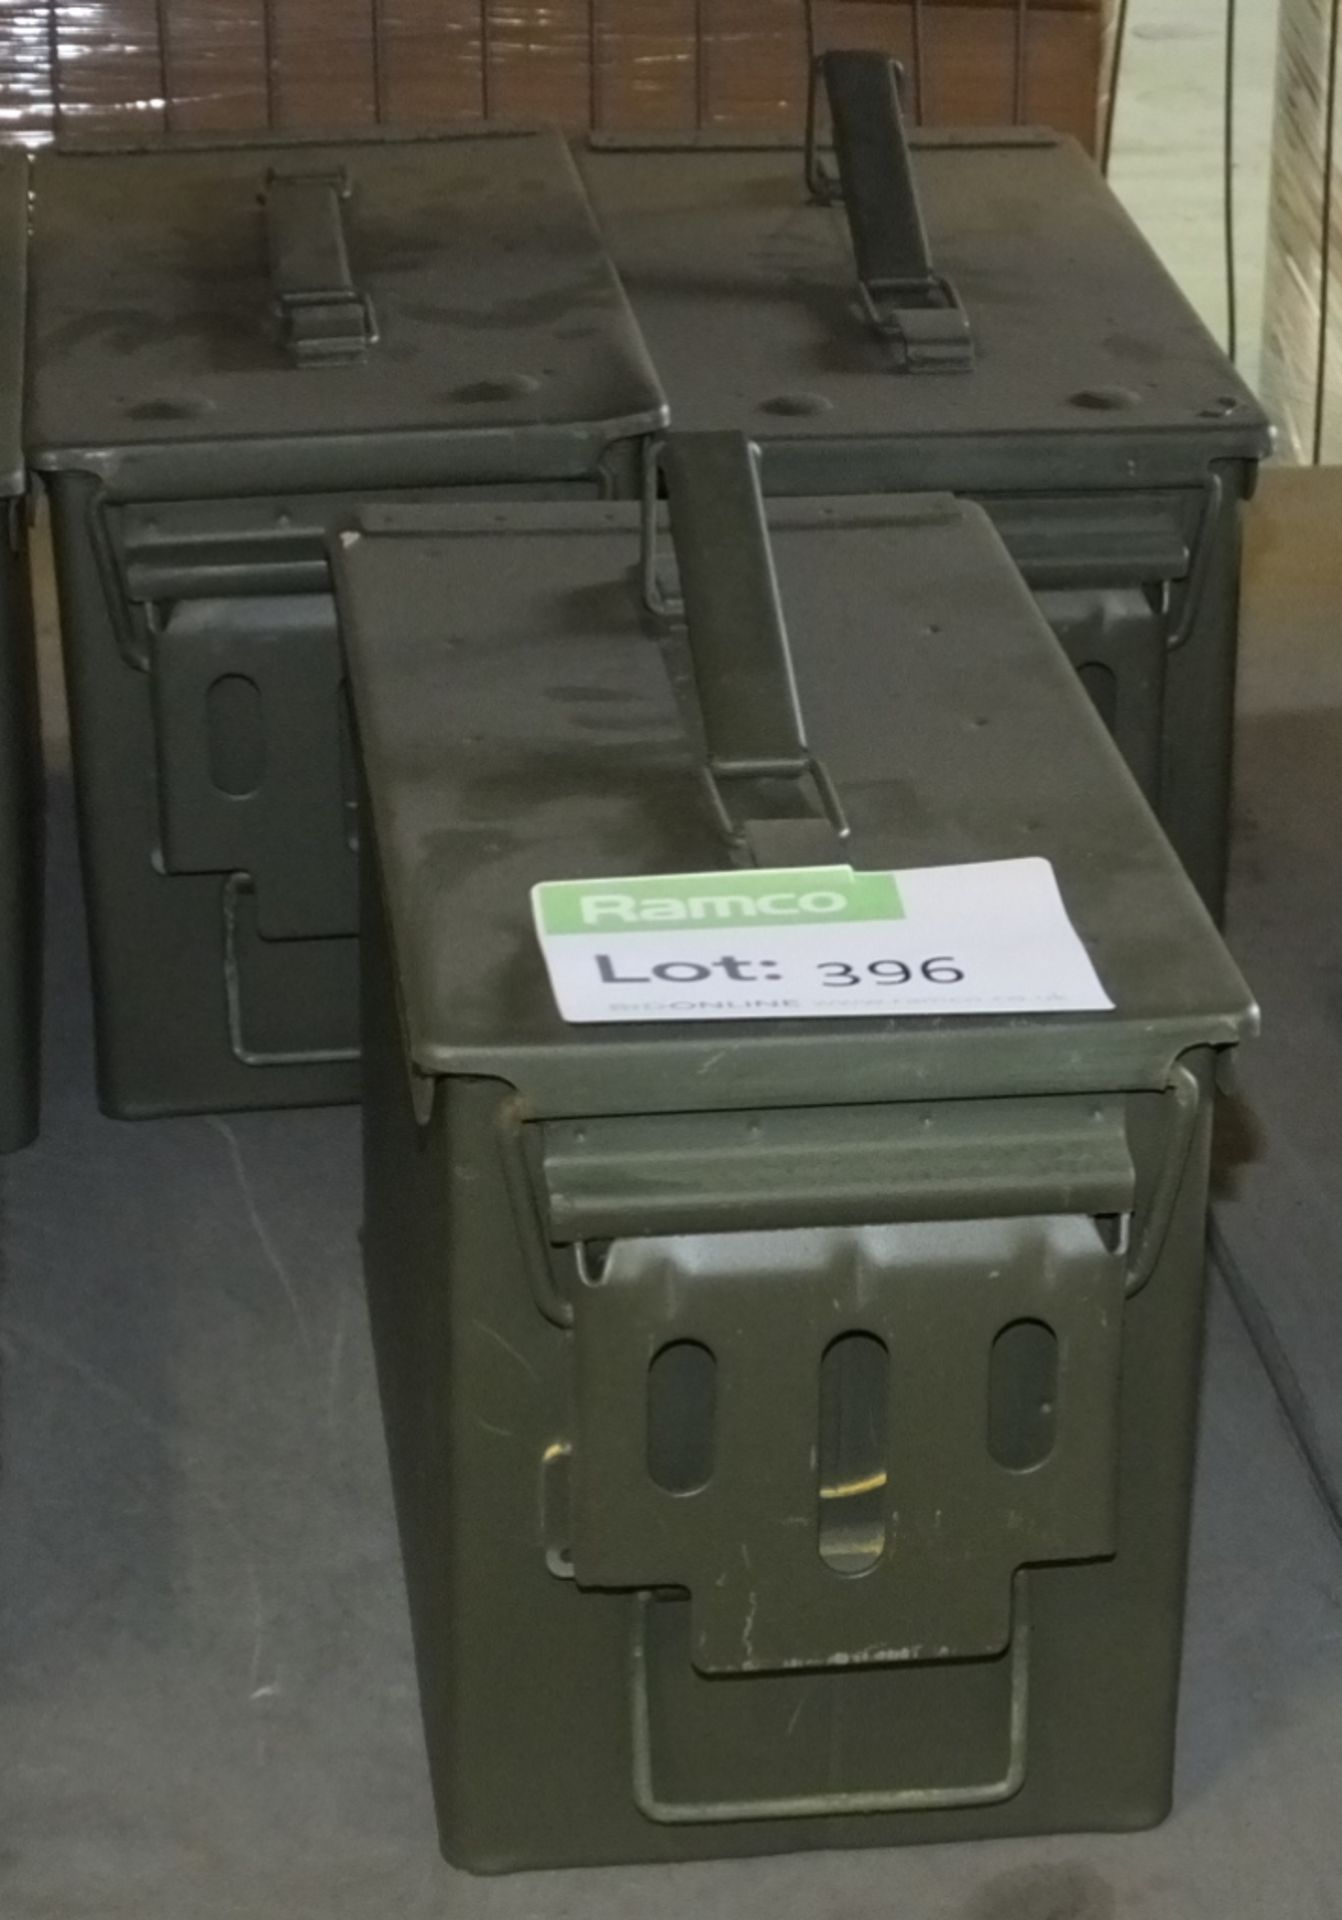 3x Ammunition Boxes Refurbished M2A1